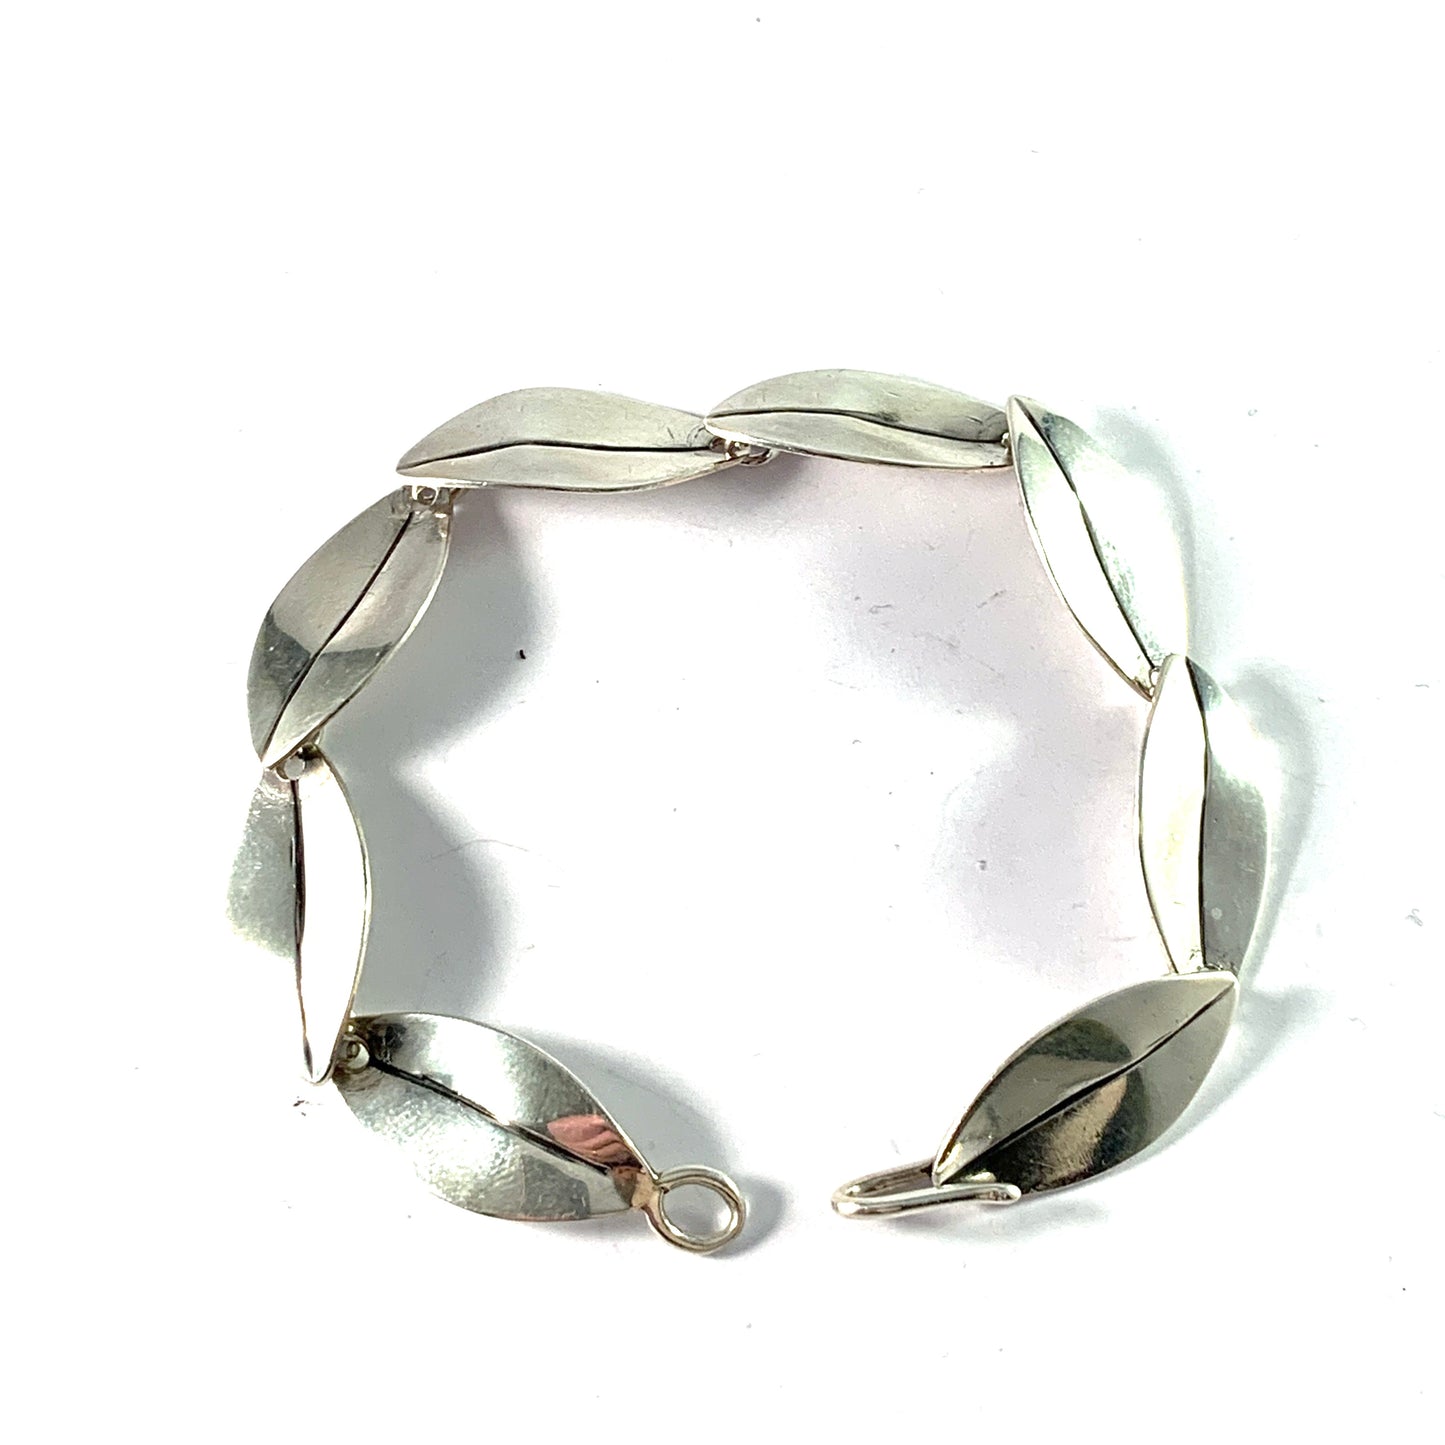 Acke R Tötterman, Sweden 1955 Mid Century Modern Sterling Silver Bracelet. Signed.